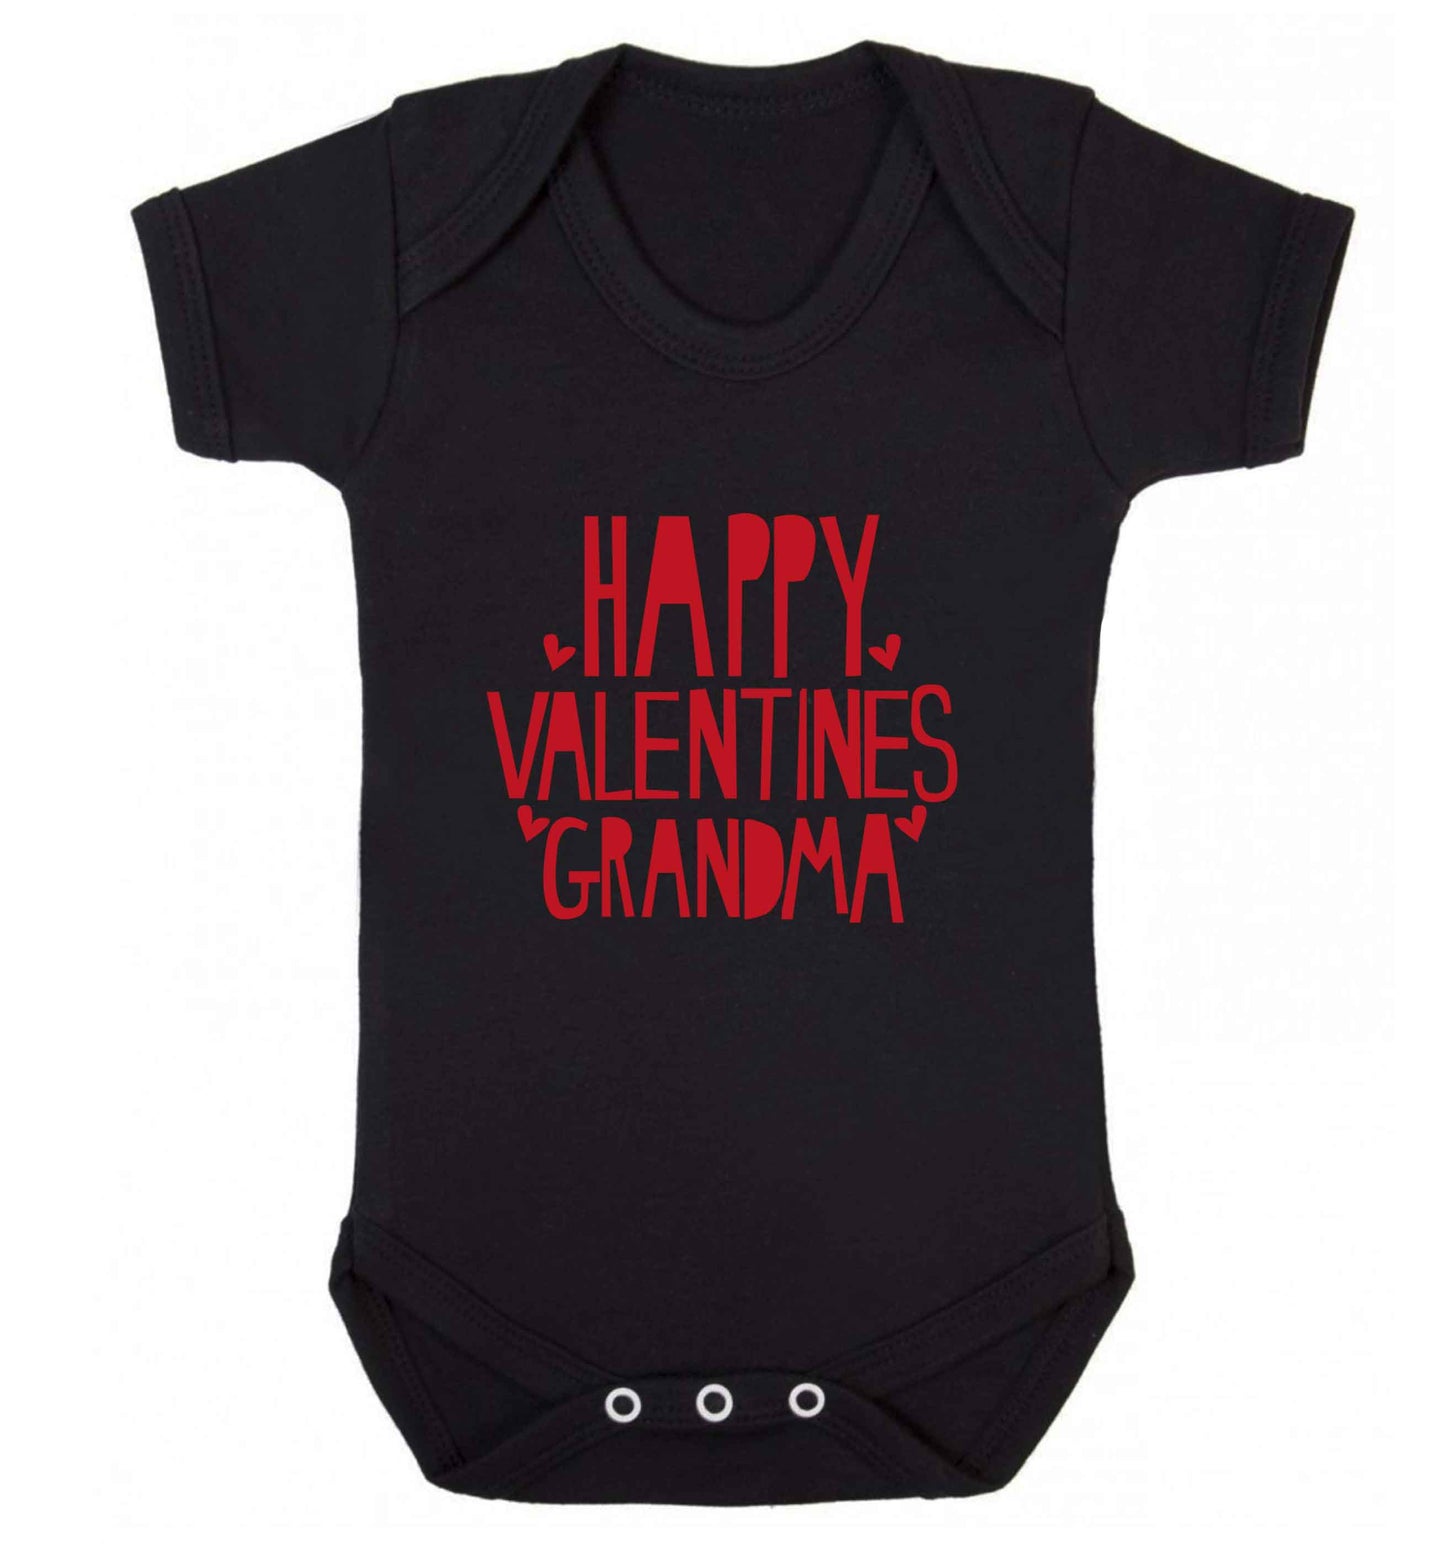 Happy valentines grandma baby vest black 18-24 months